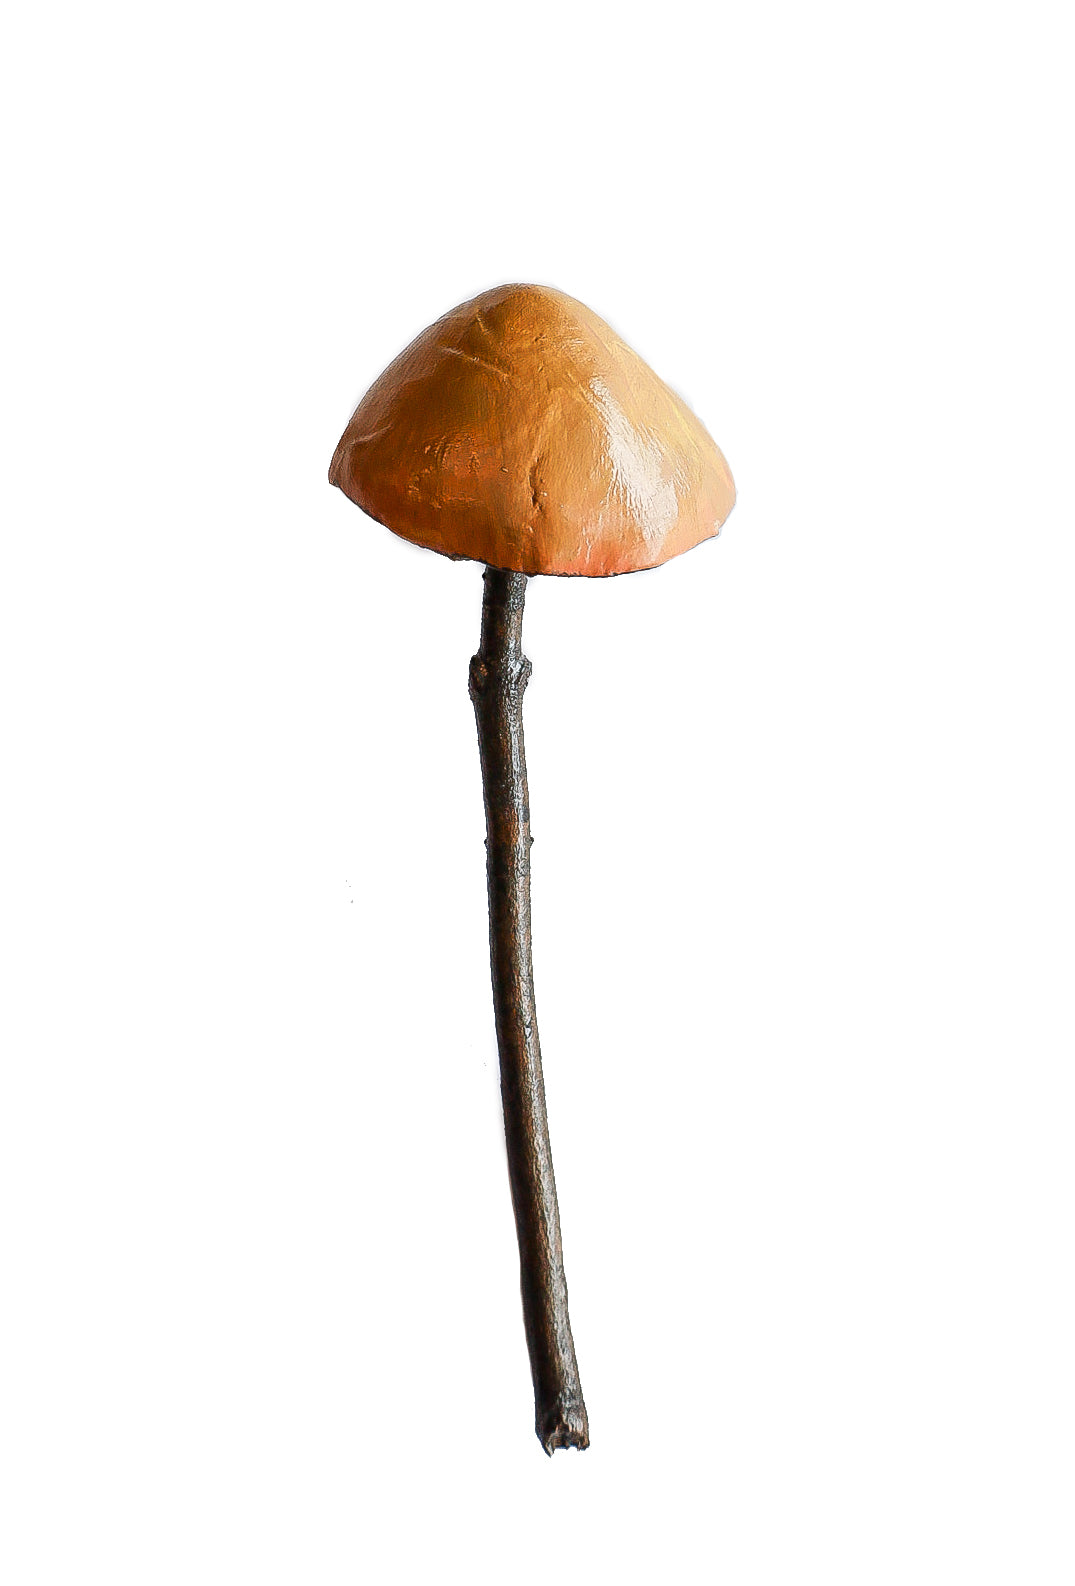 clay and wood mushroom sculpture 18 by Emma Lee Fleury